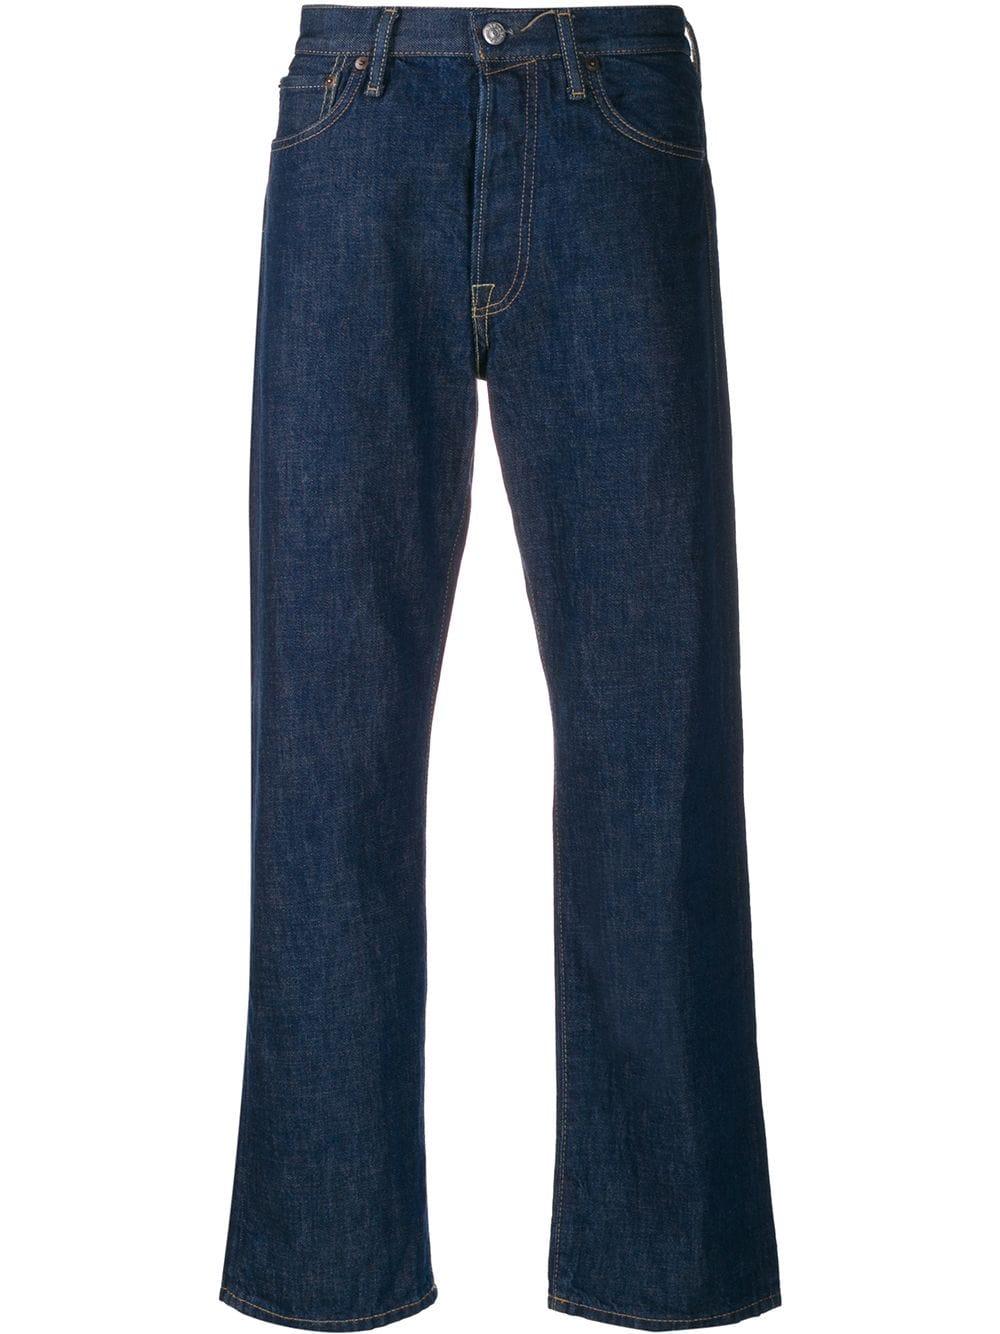 Acne Studios Denim 1996 Regular Fit Jeans in Blue for Men - Lyst